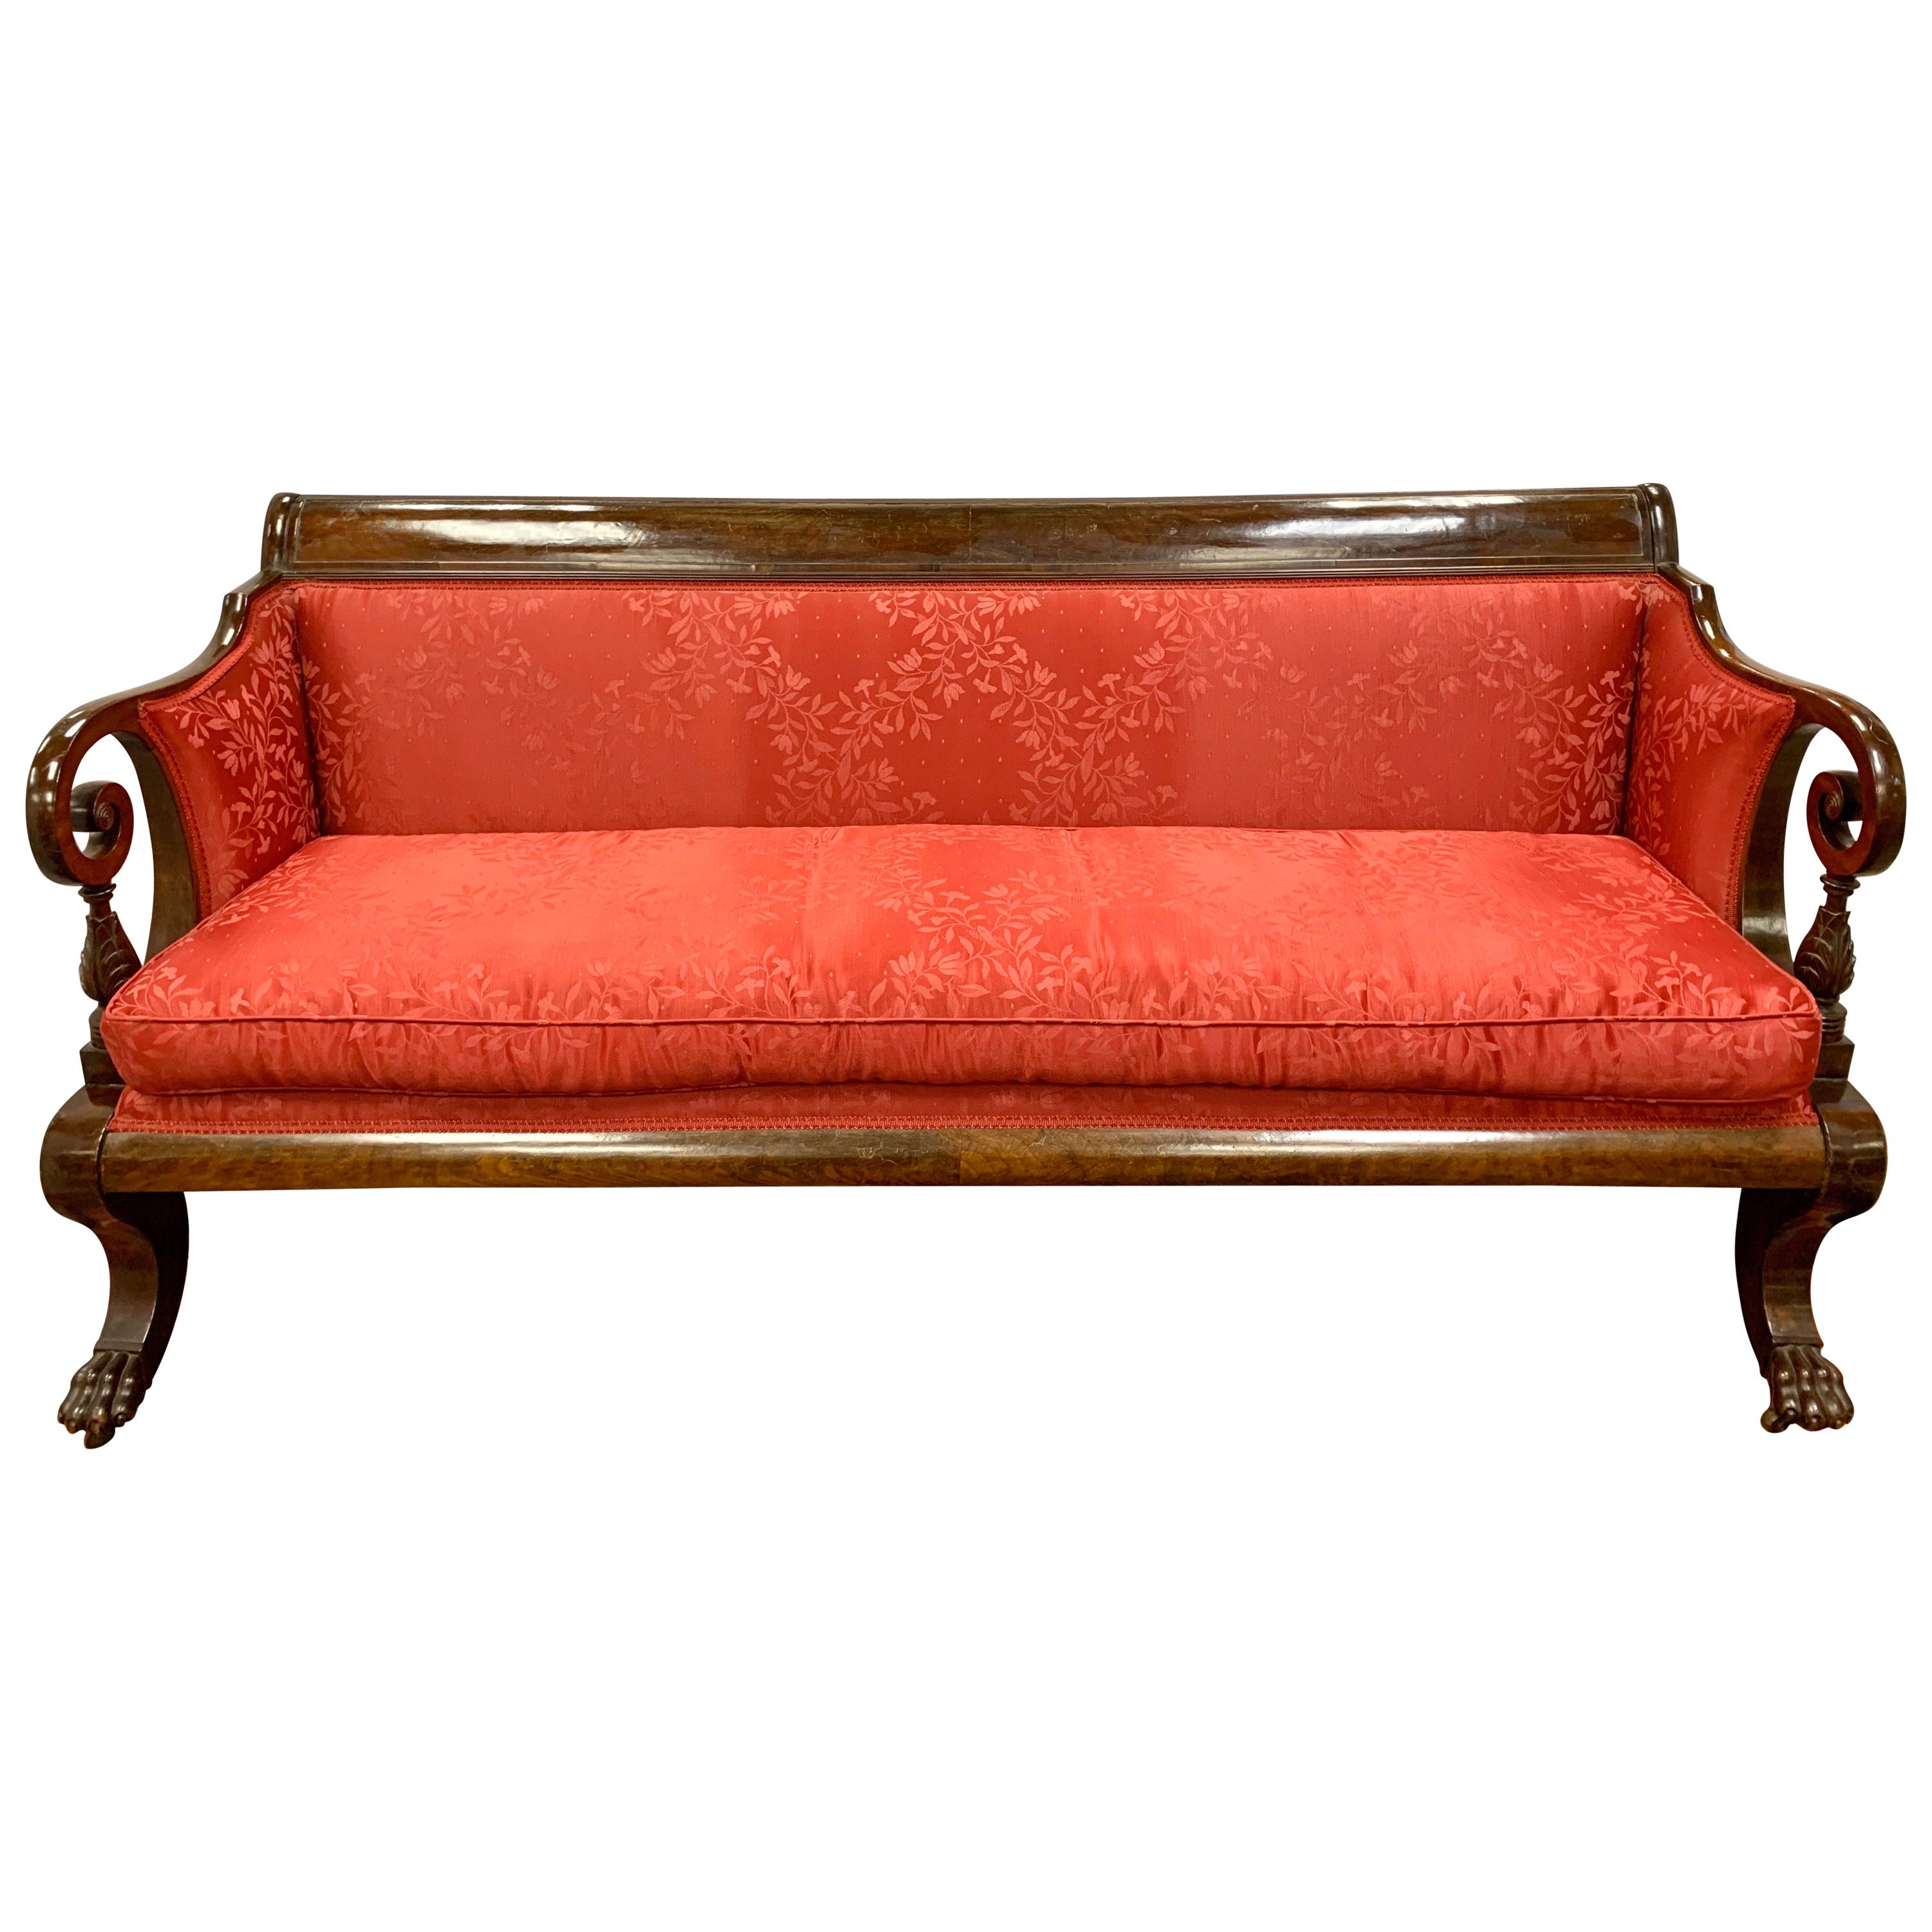 Antique American Empire Mahogany Red Silk Sofa Bench New York 1820s